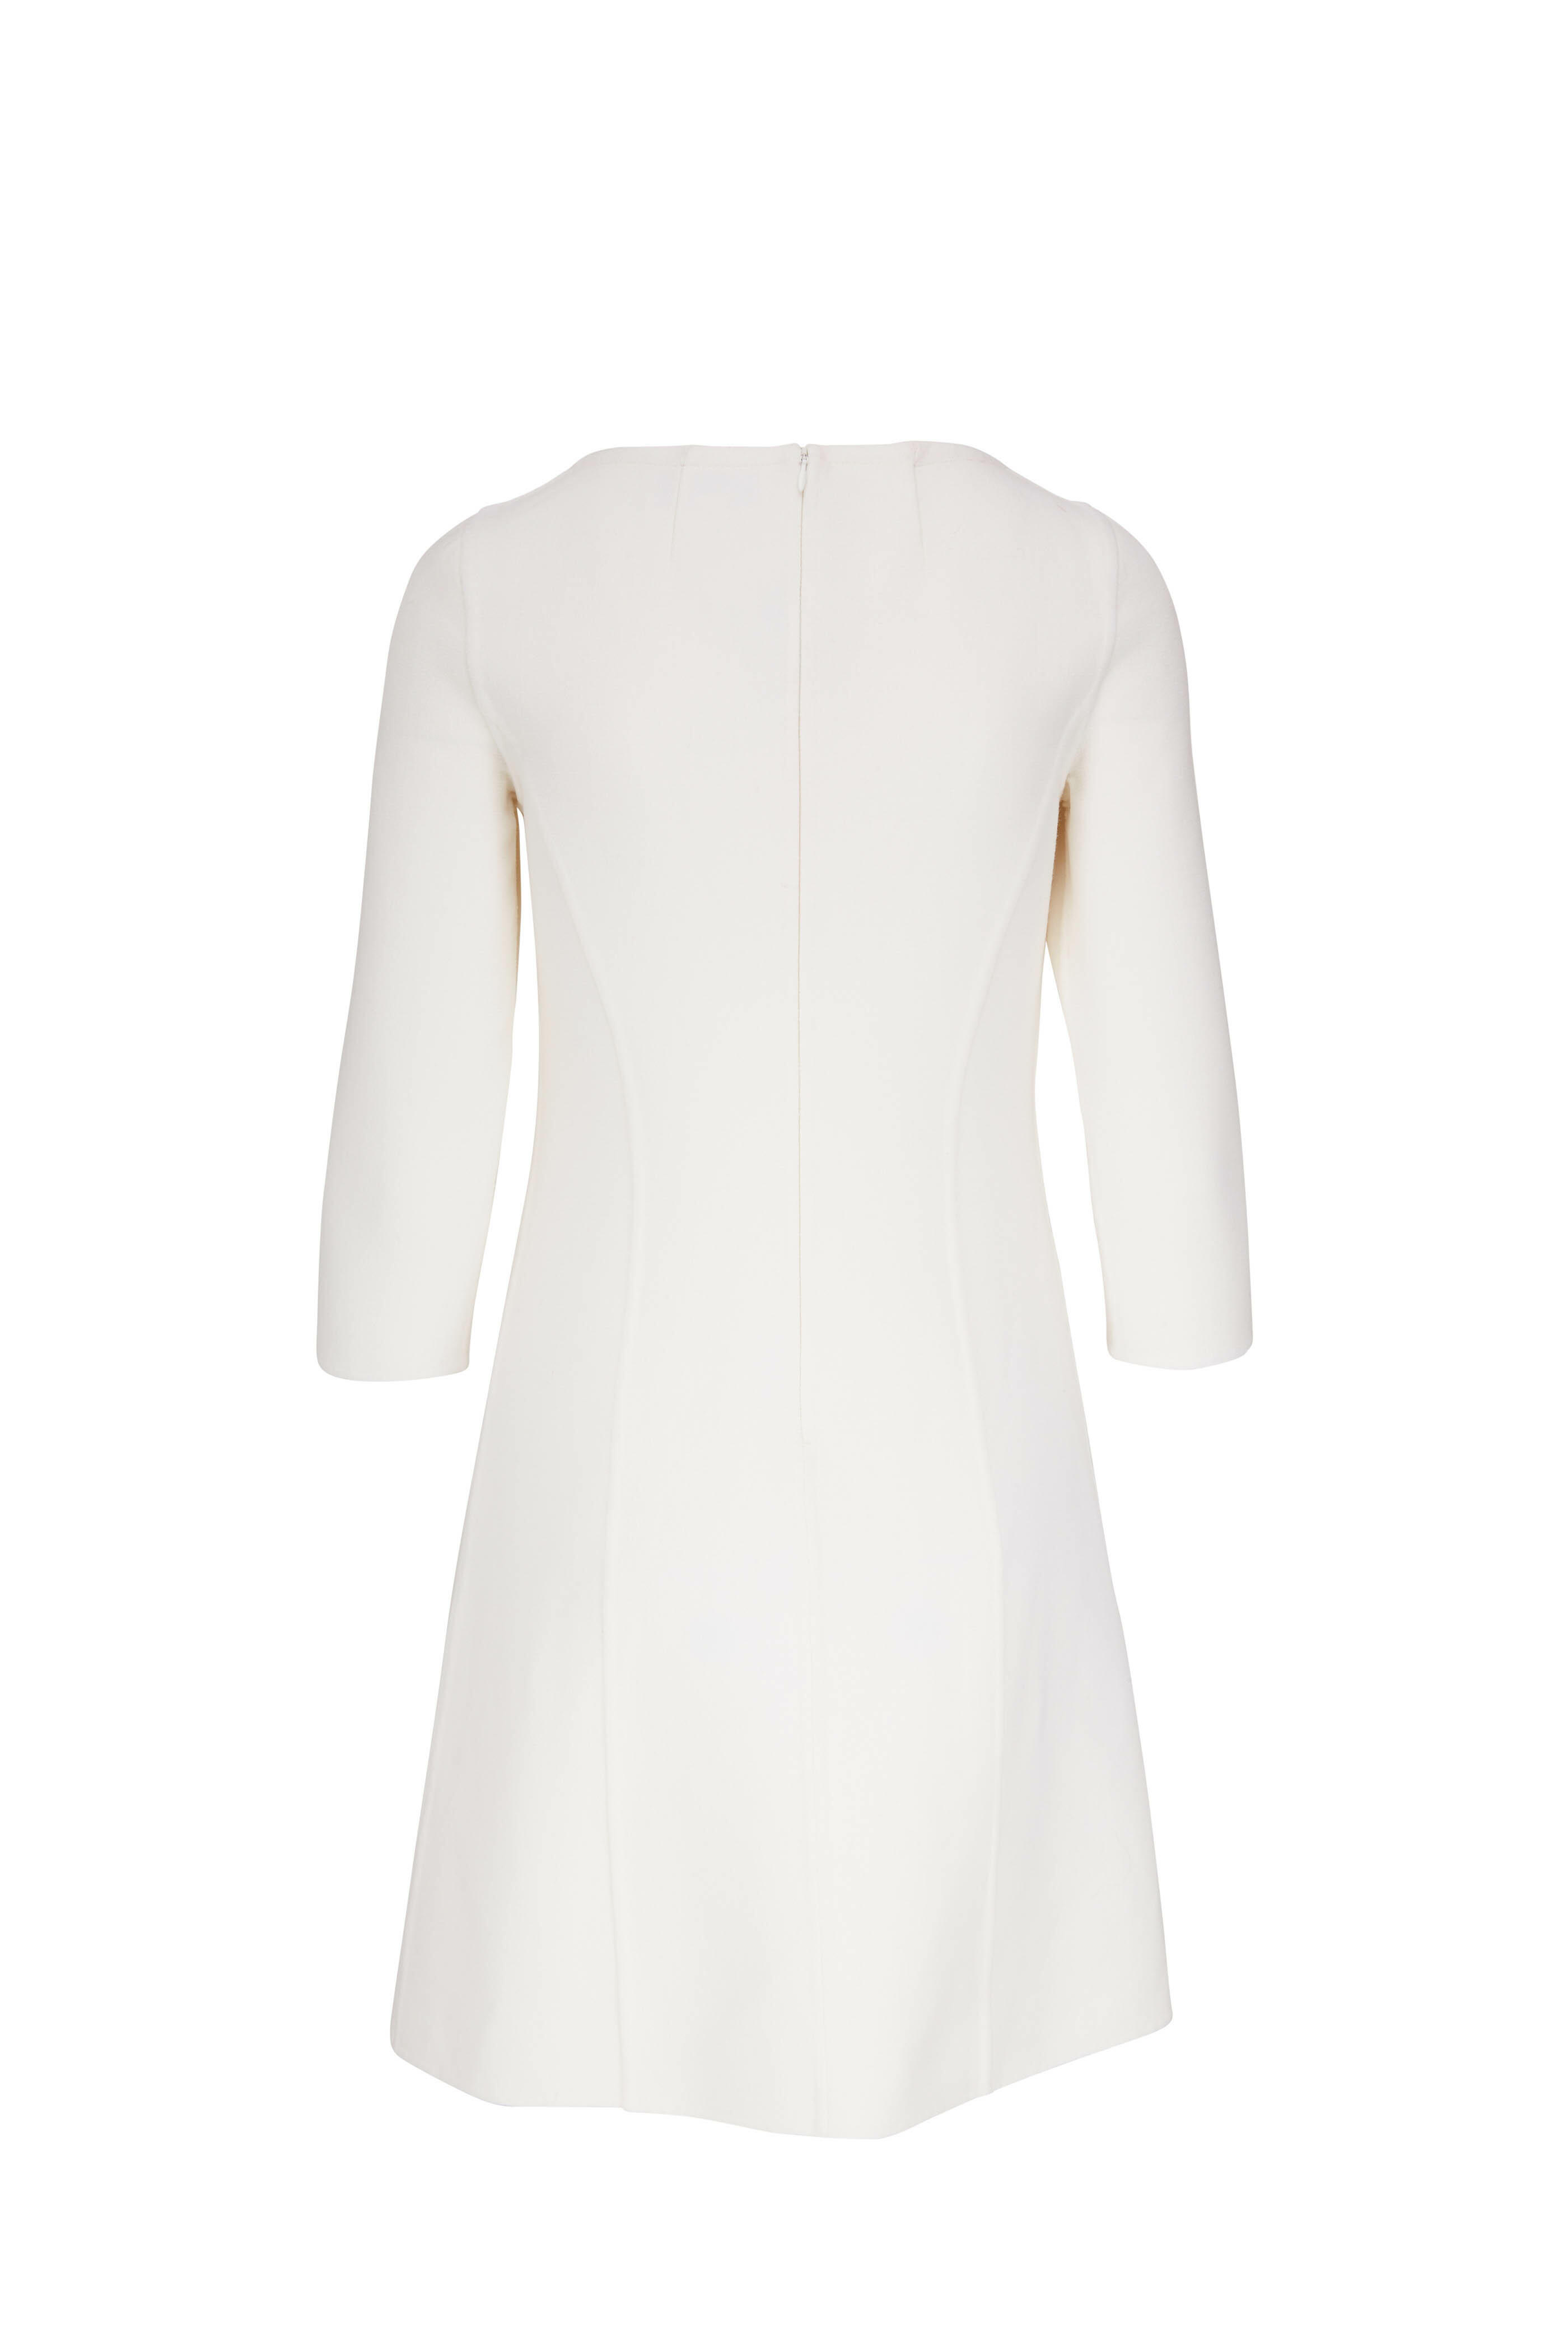 Michael Kors Collection - White Wool Sleeve Three-Quarter Shift Dress